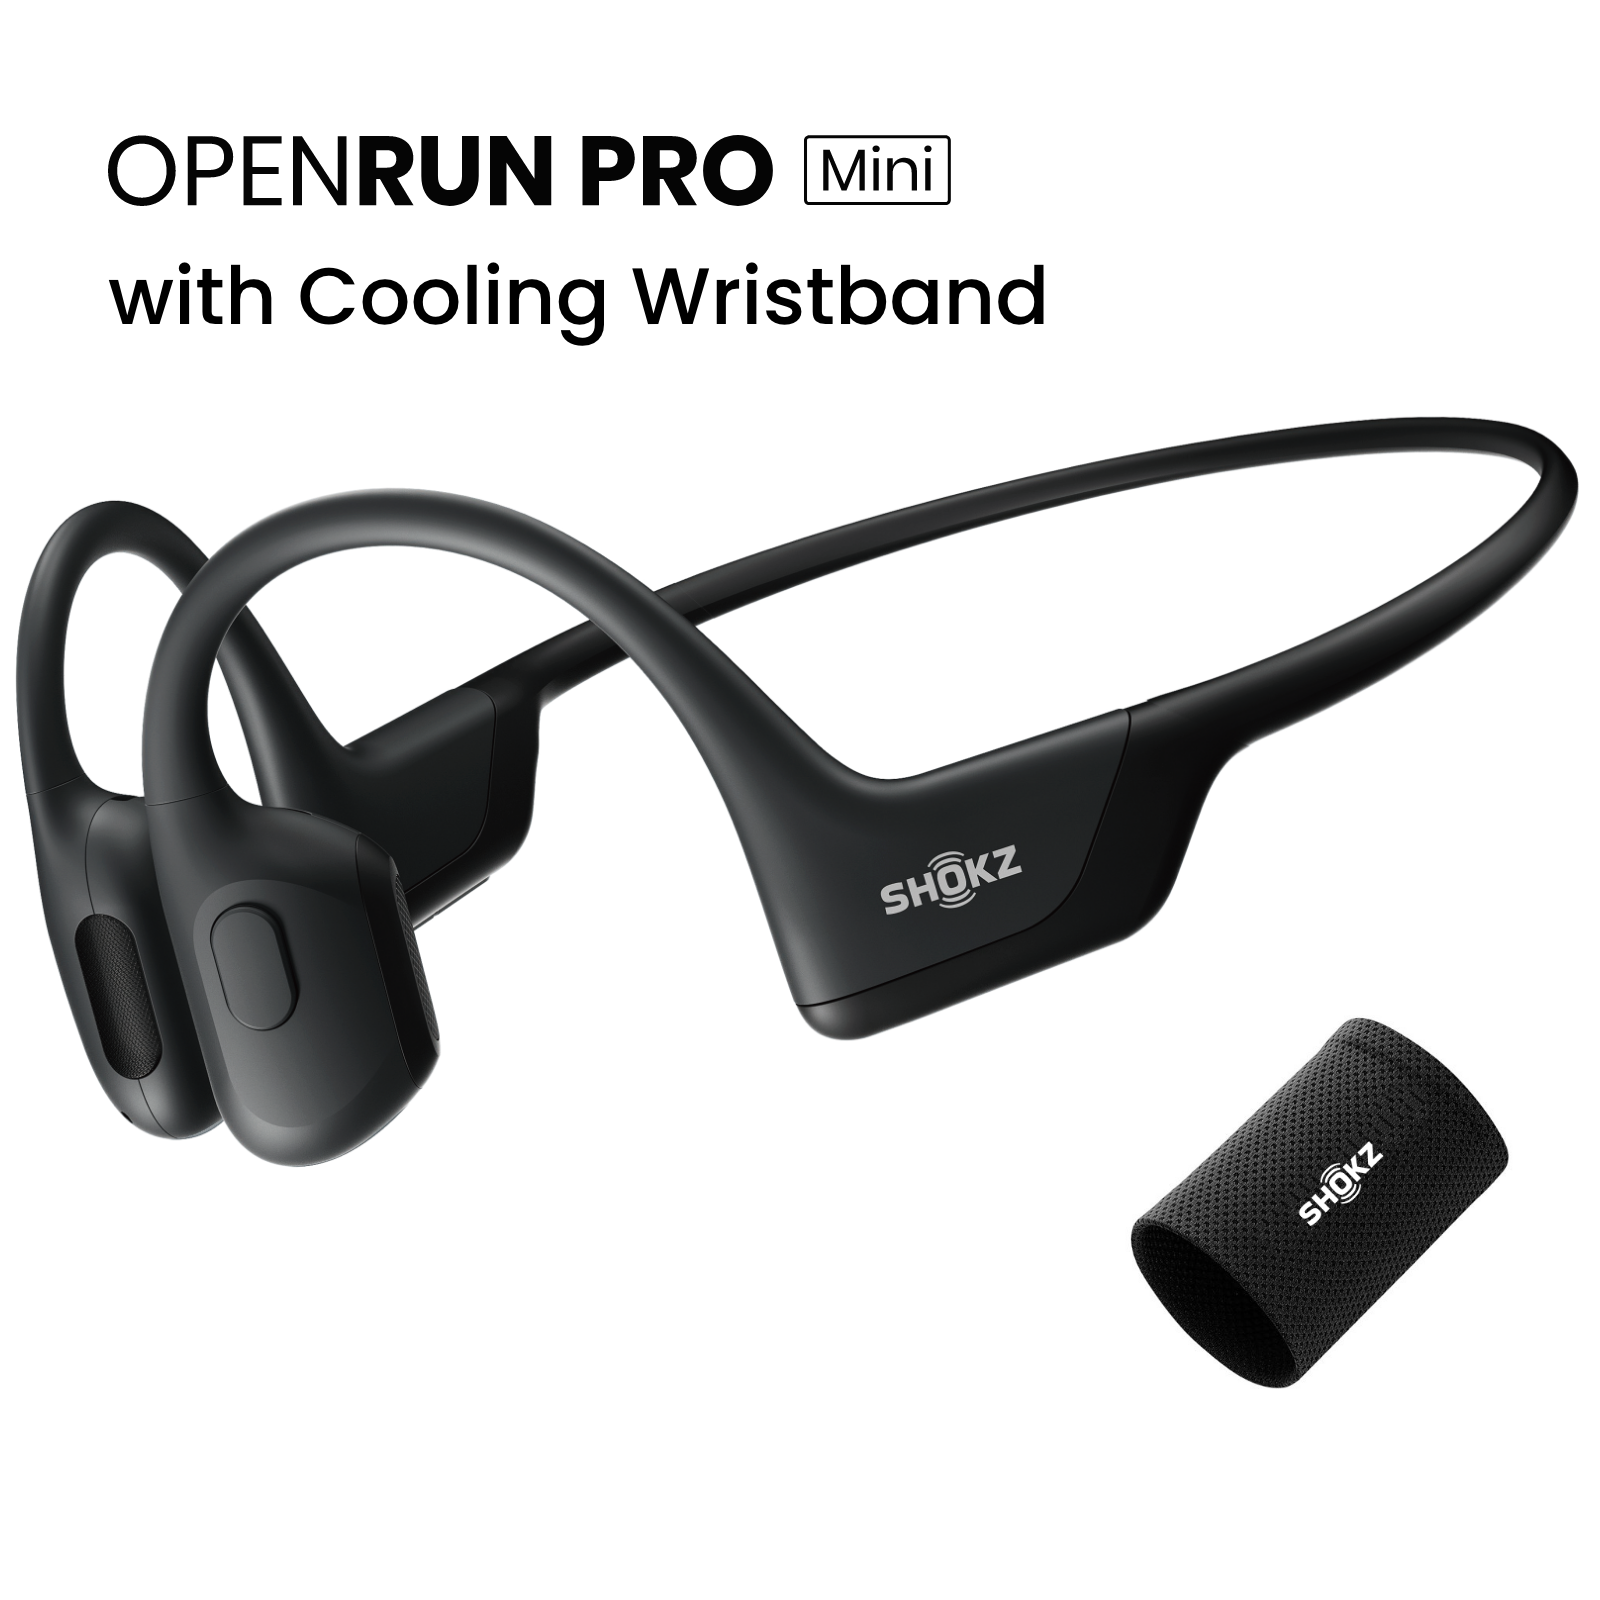 Shokz OpenRun Pro Mini Bone Conduction Open Ear Bluetooth Headphones for Sports with Cooling Wristband (Black,Mini) - image 1 of 7